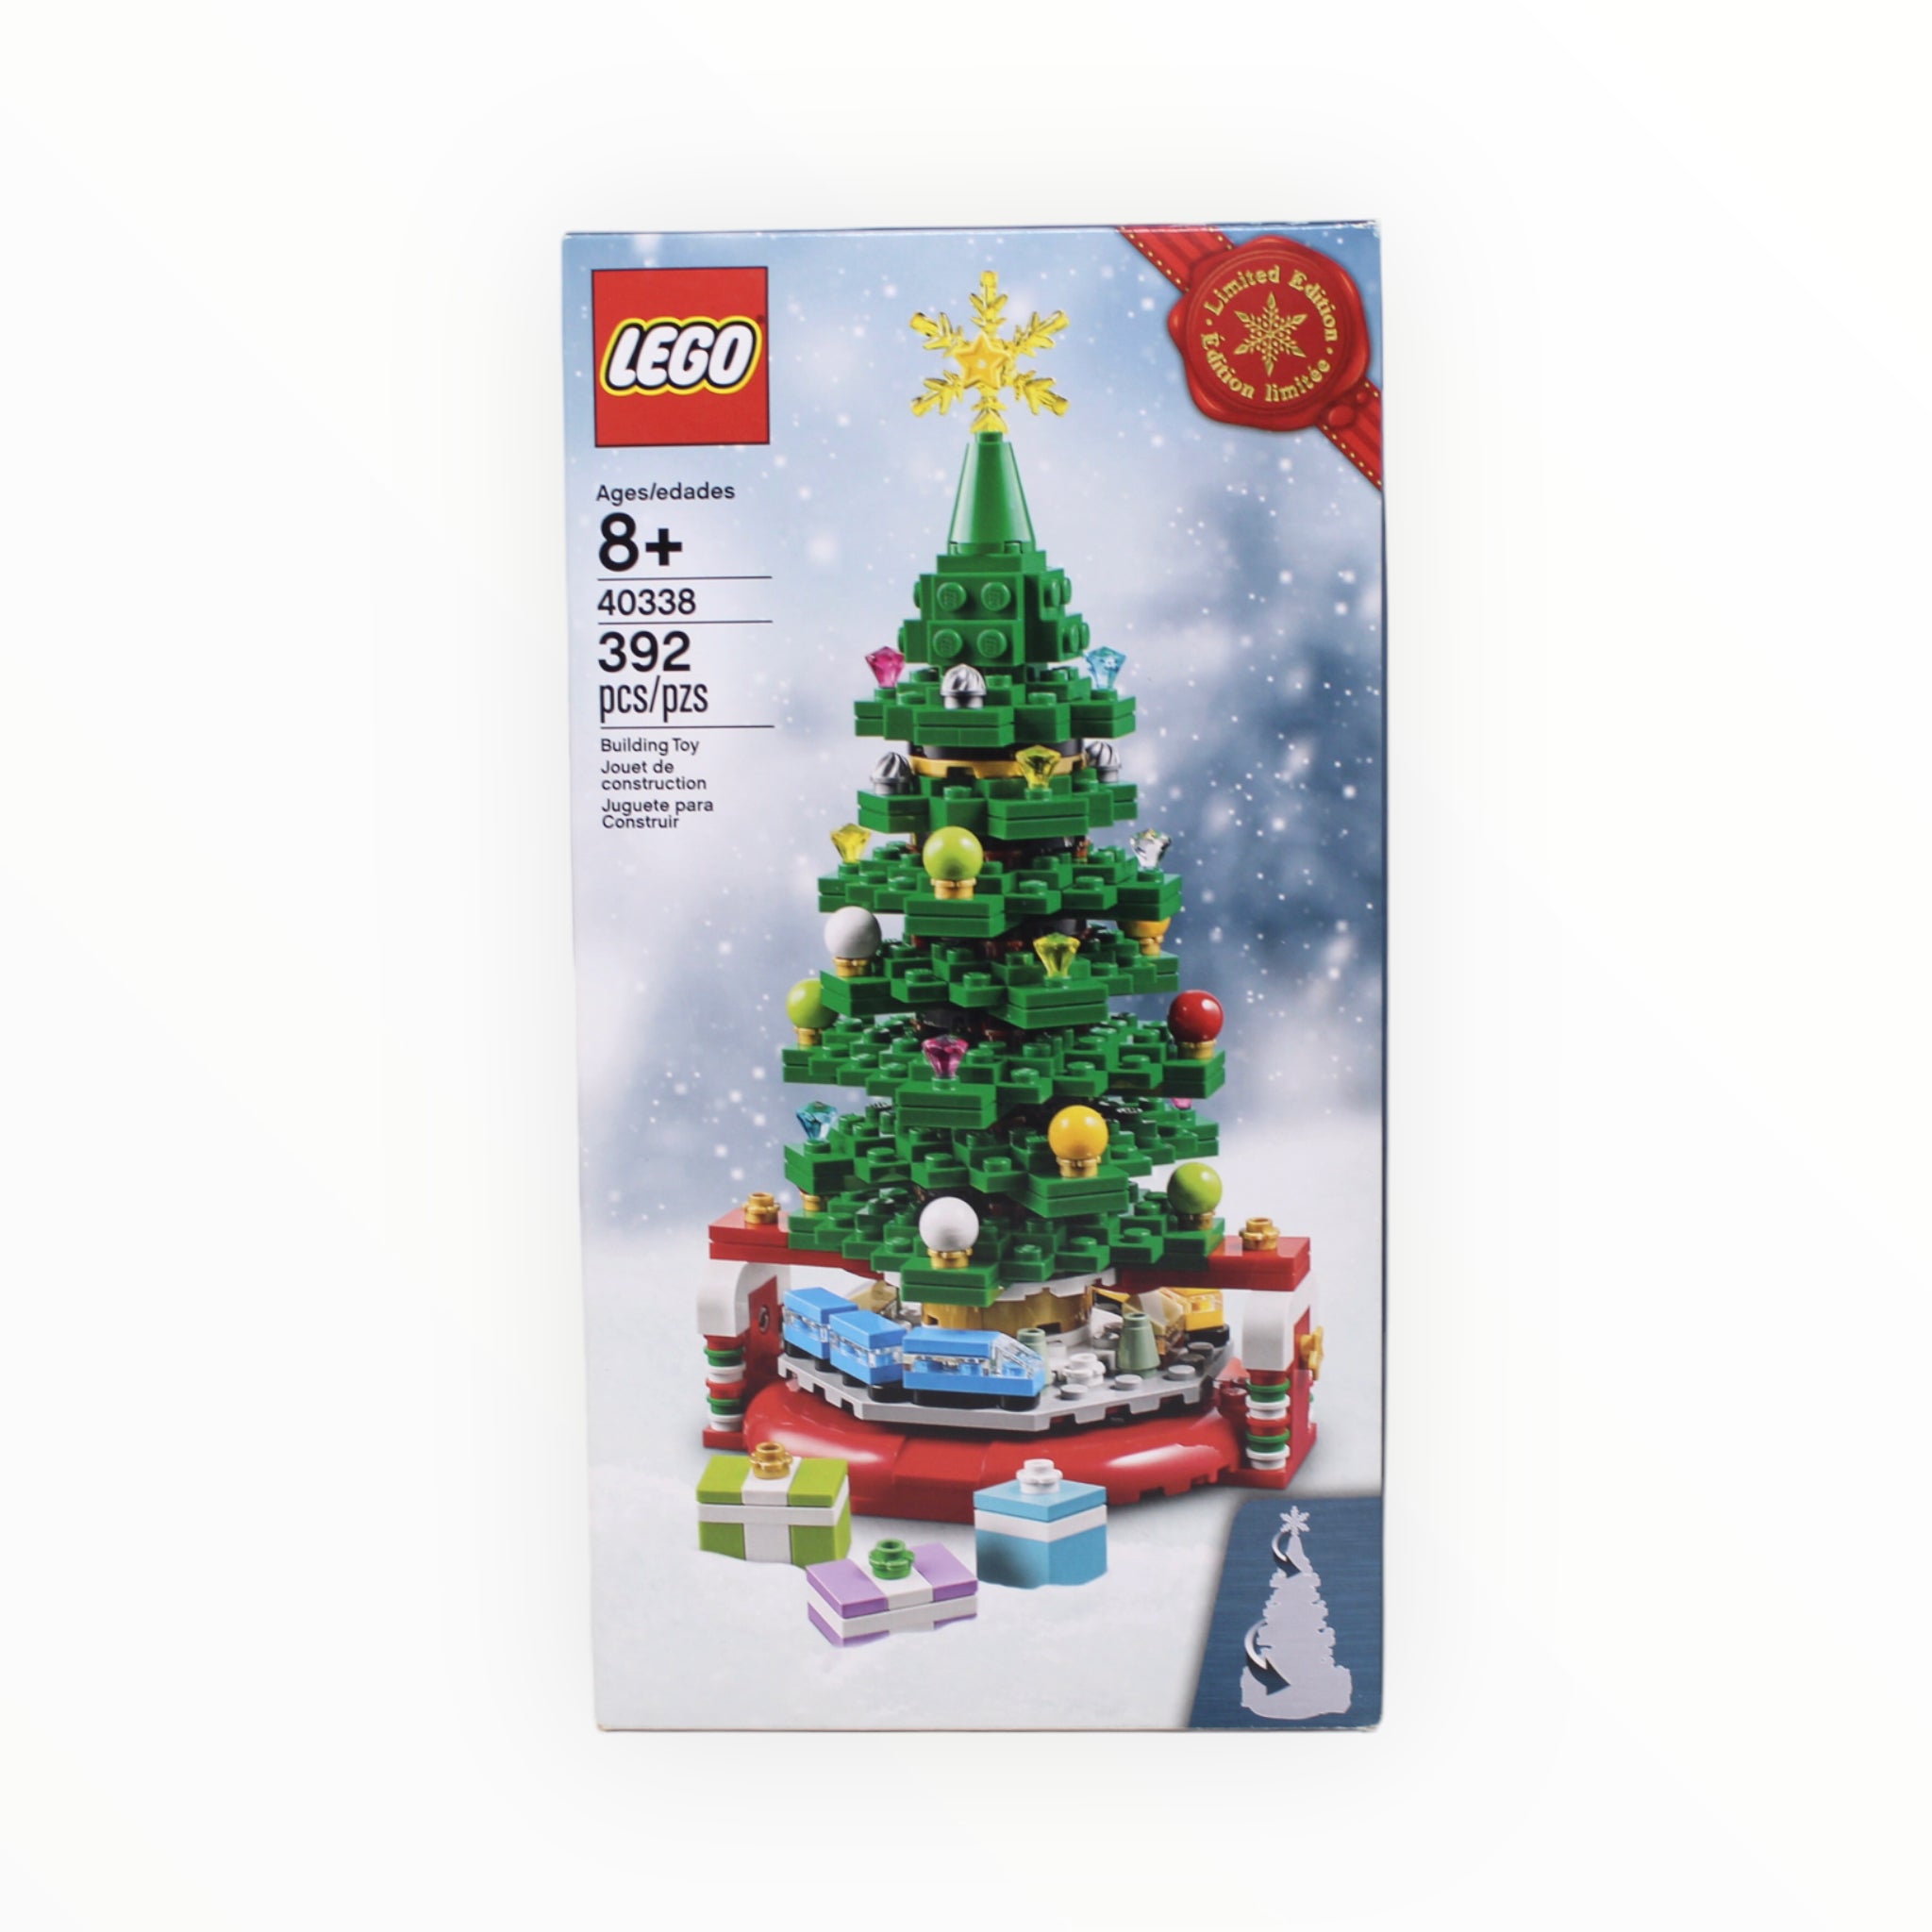 Certified Used Set 40338 LEGO Christmas Tree (2019)